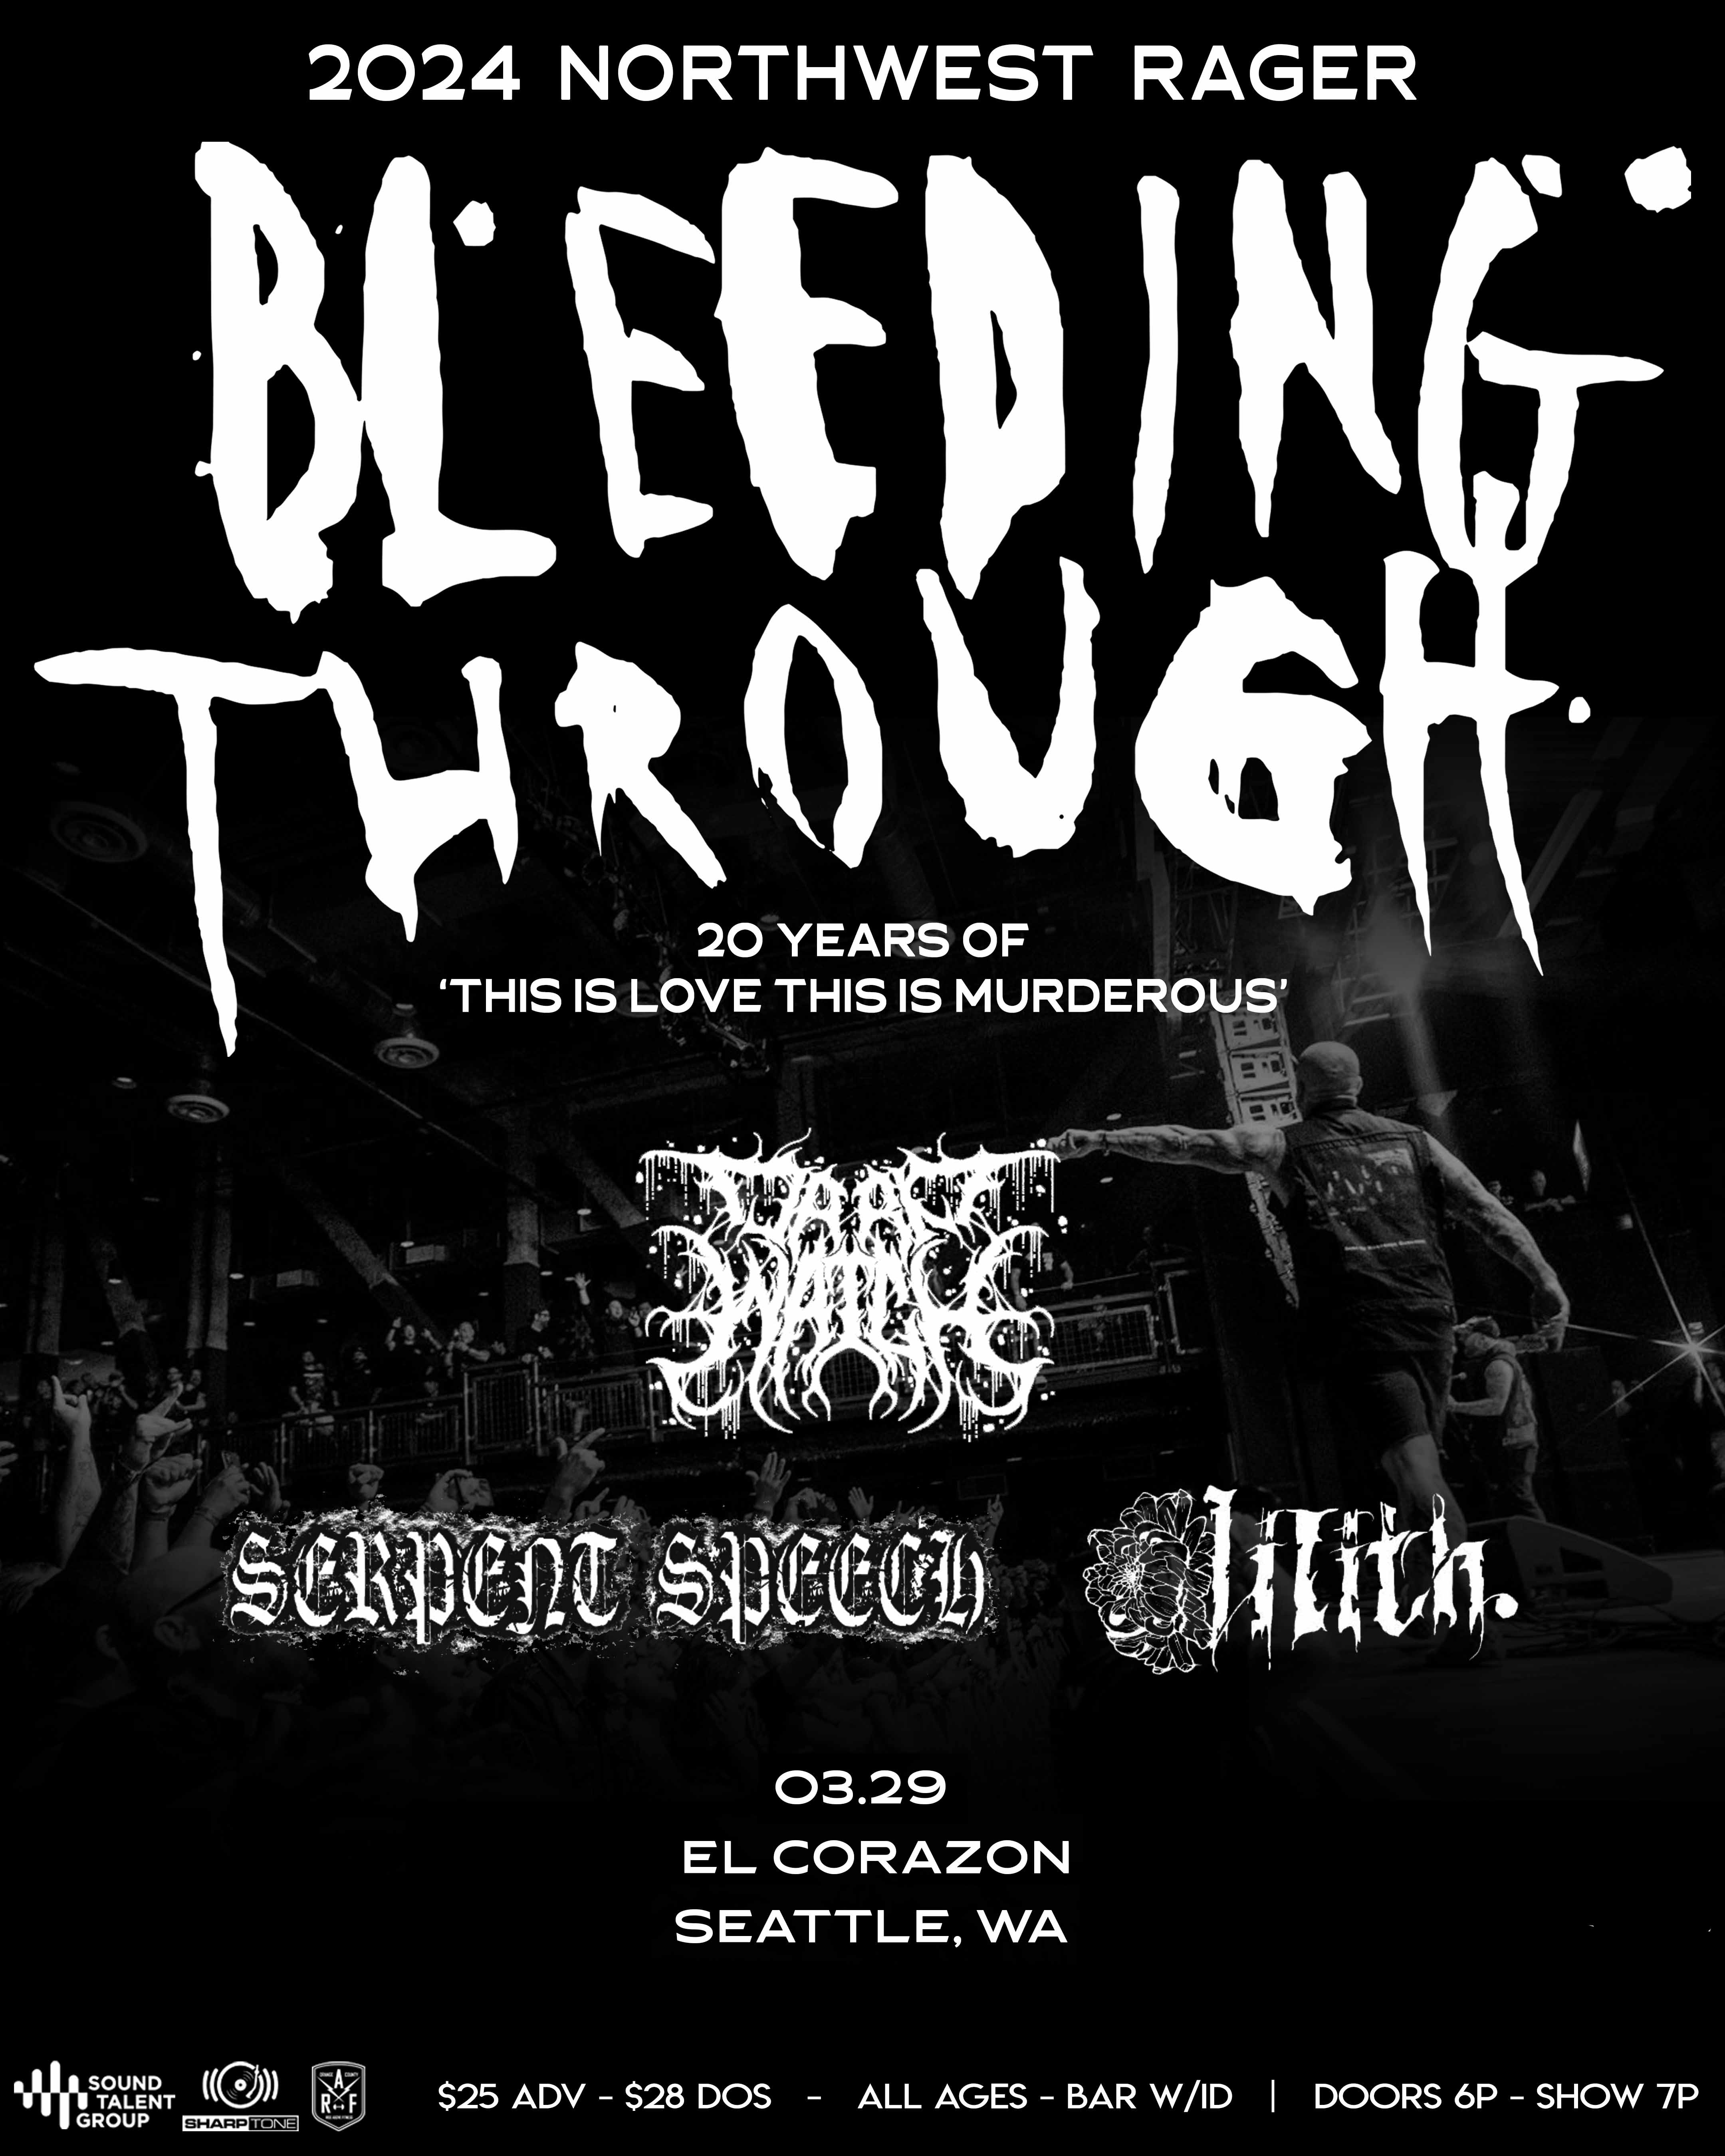 Bleeders A Bleeding Heart E.P. 20 Year Anniversary Tour - Last